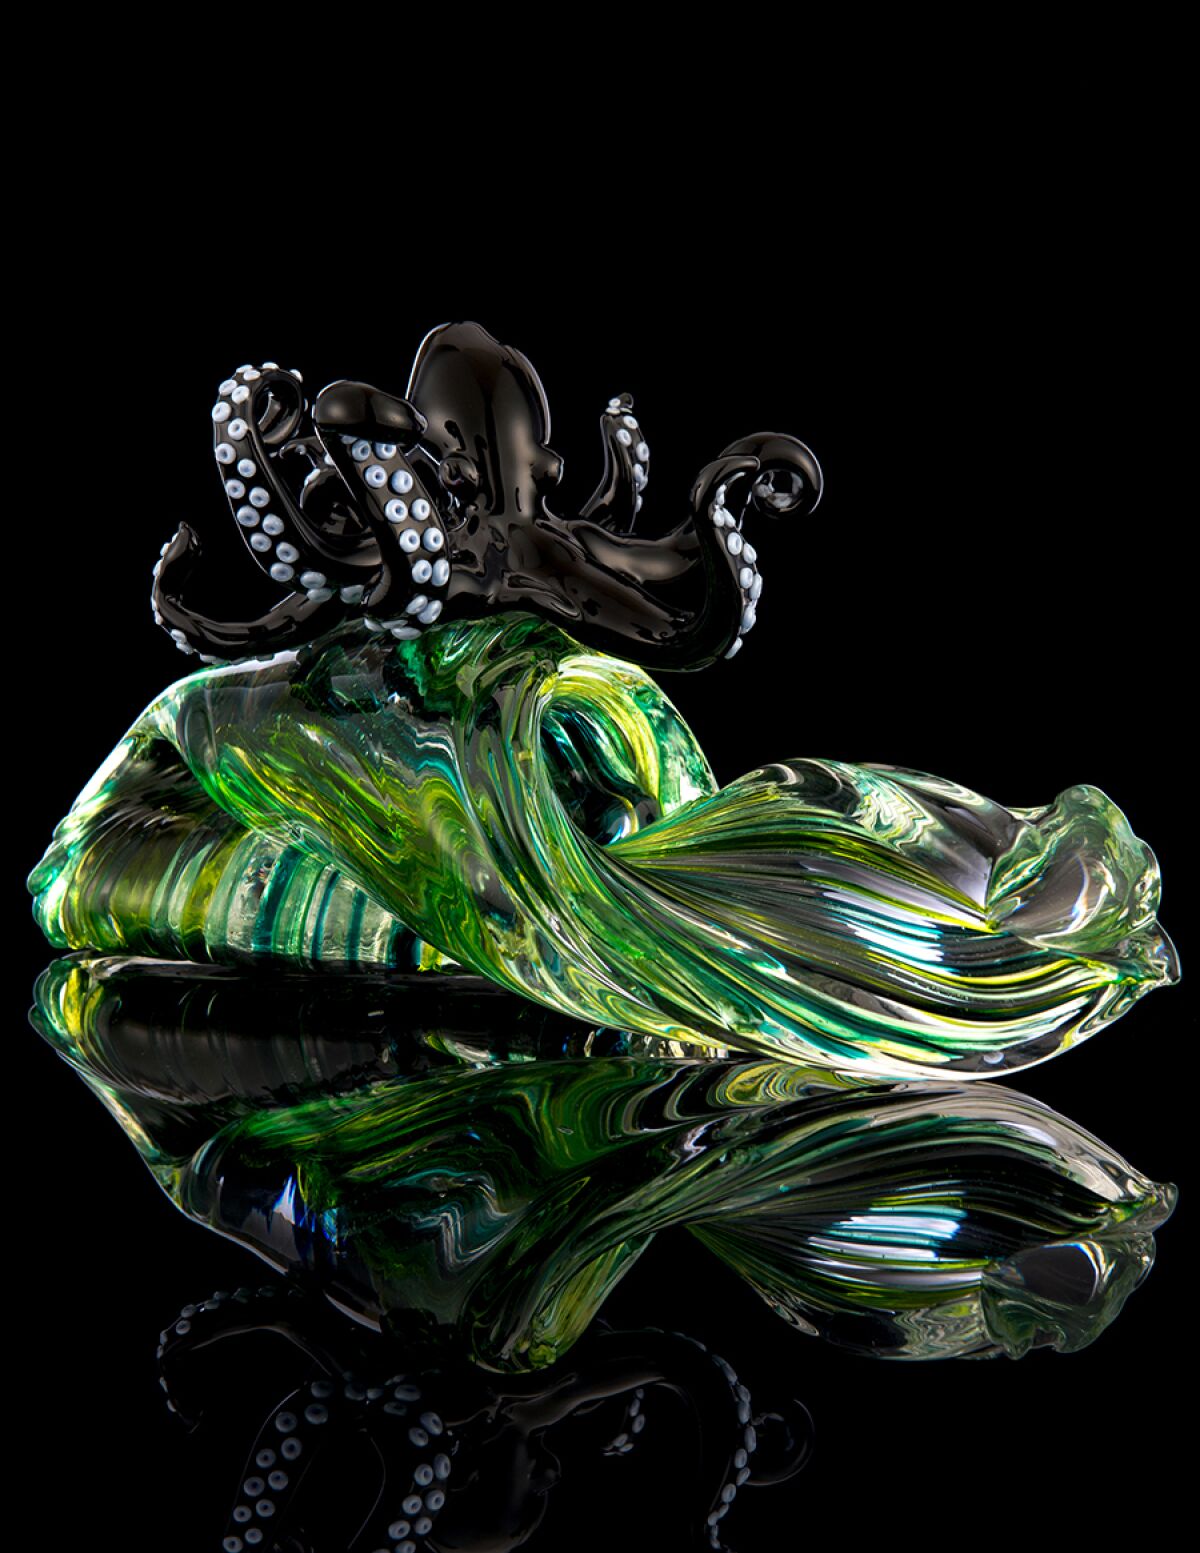 A glass piece by artist Mike Shelbo